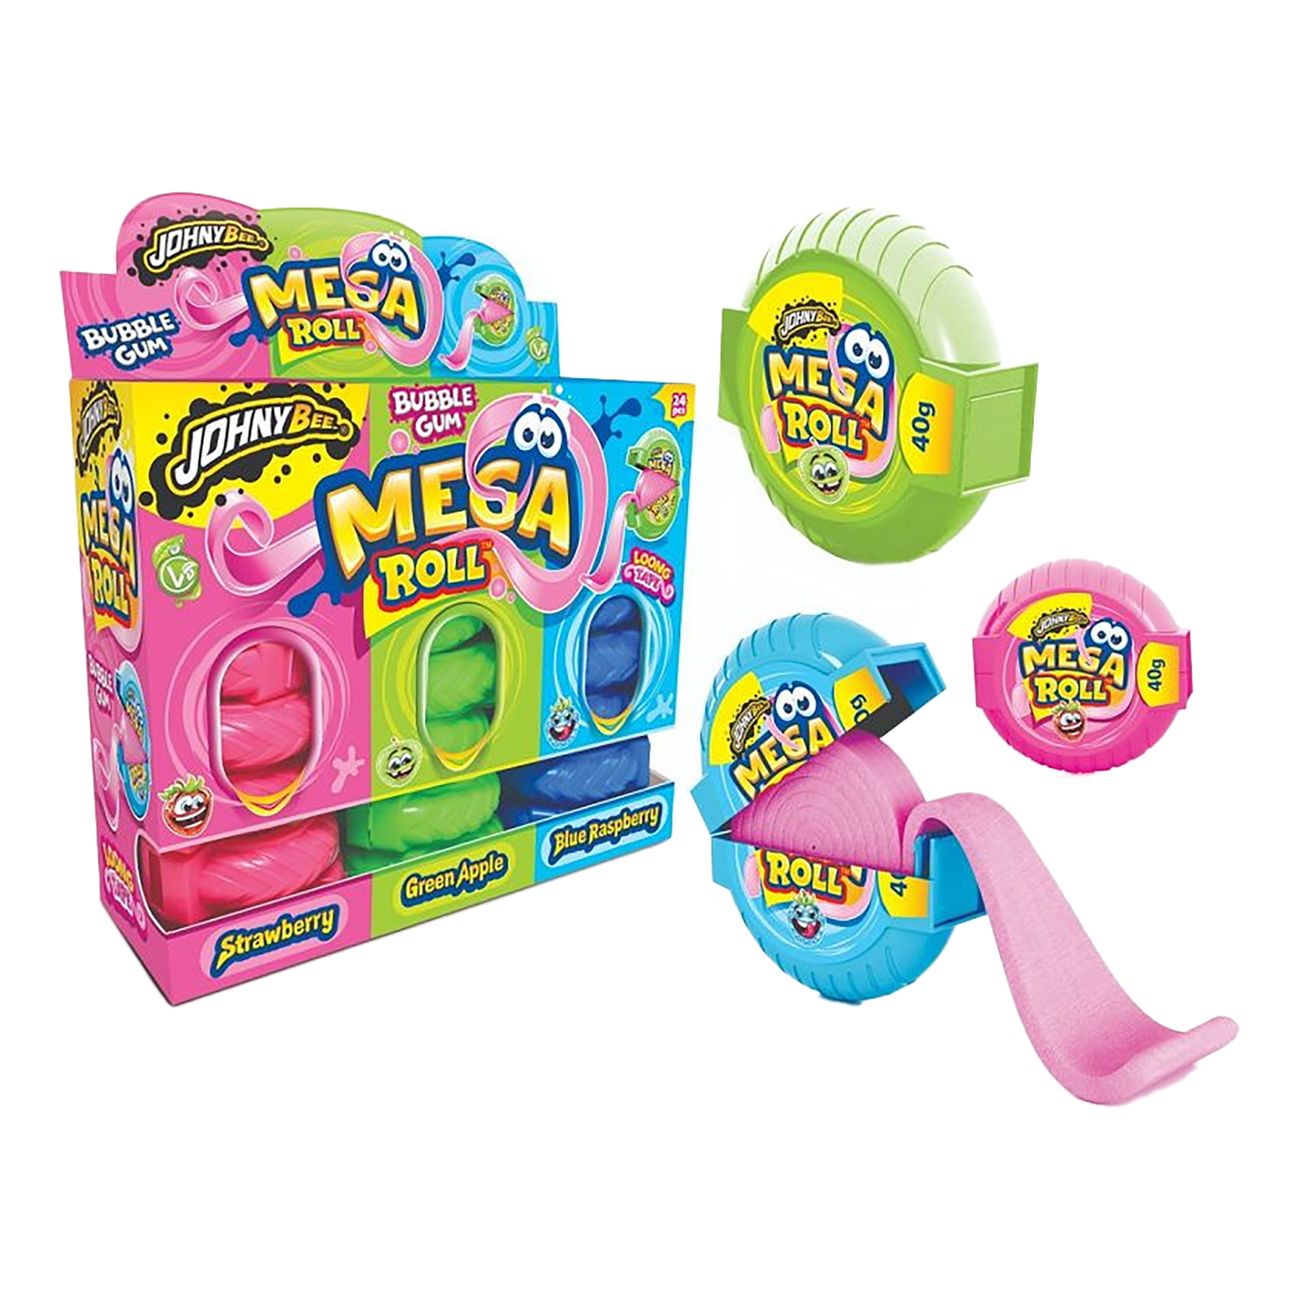 mega-roll-bubble-gum-tuggummi-88798-1